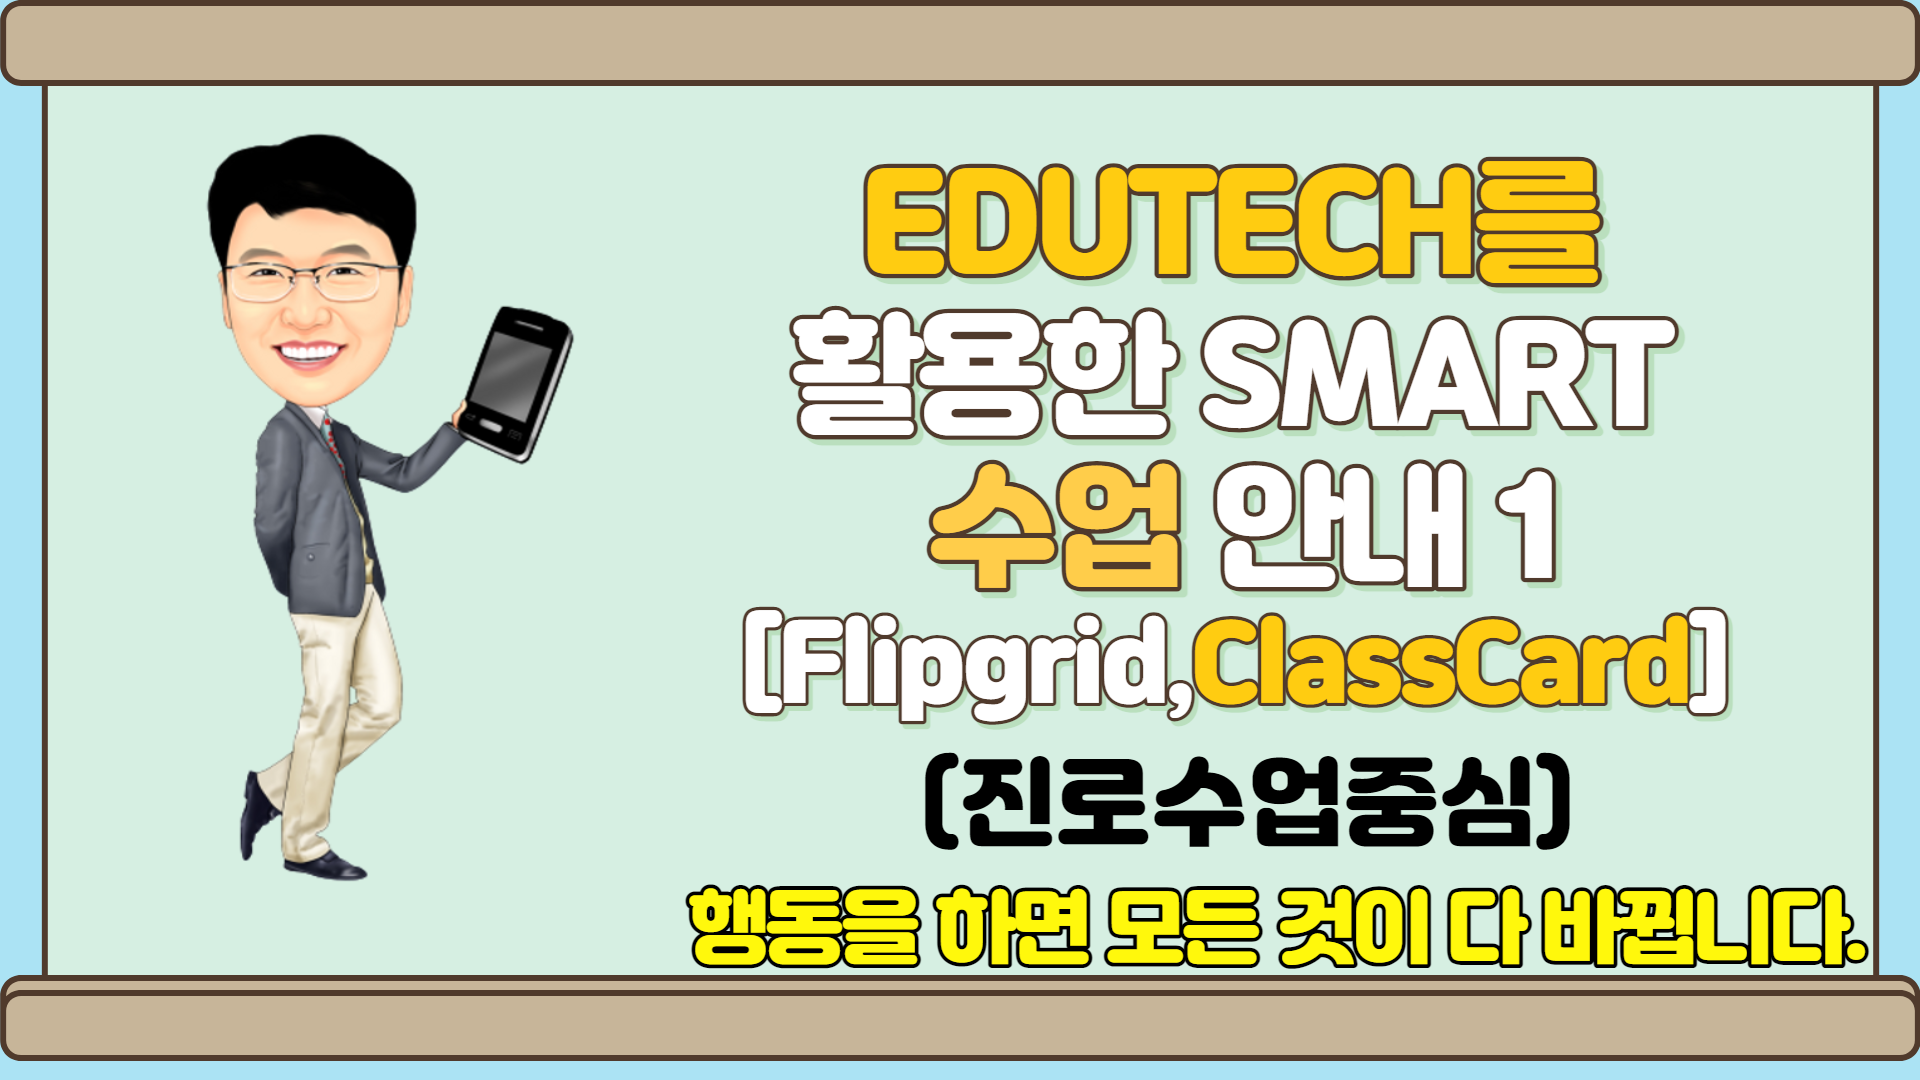 EDUTECH를 활용한 smart수업 방법 안내1 (Flipgrid,Classcard) 13:00~14:50